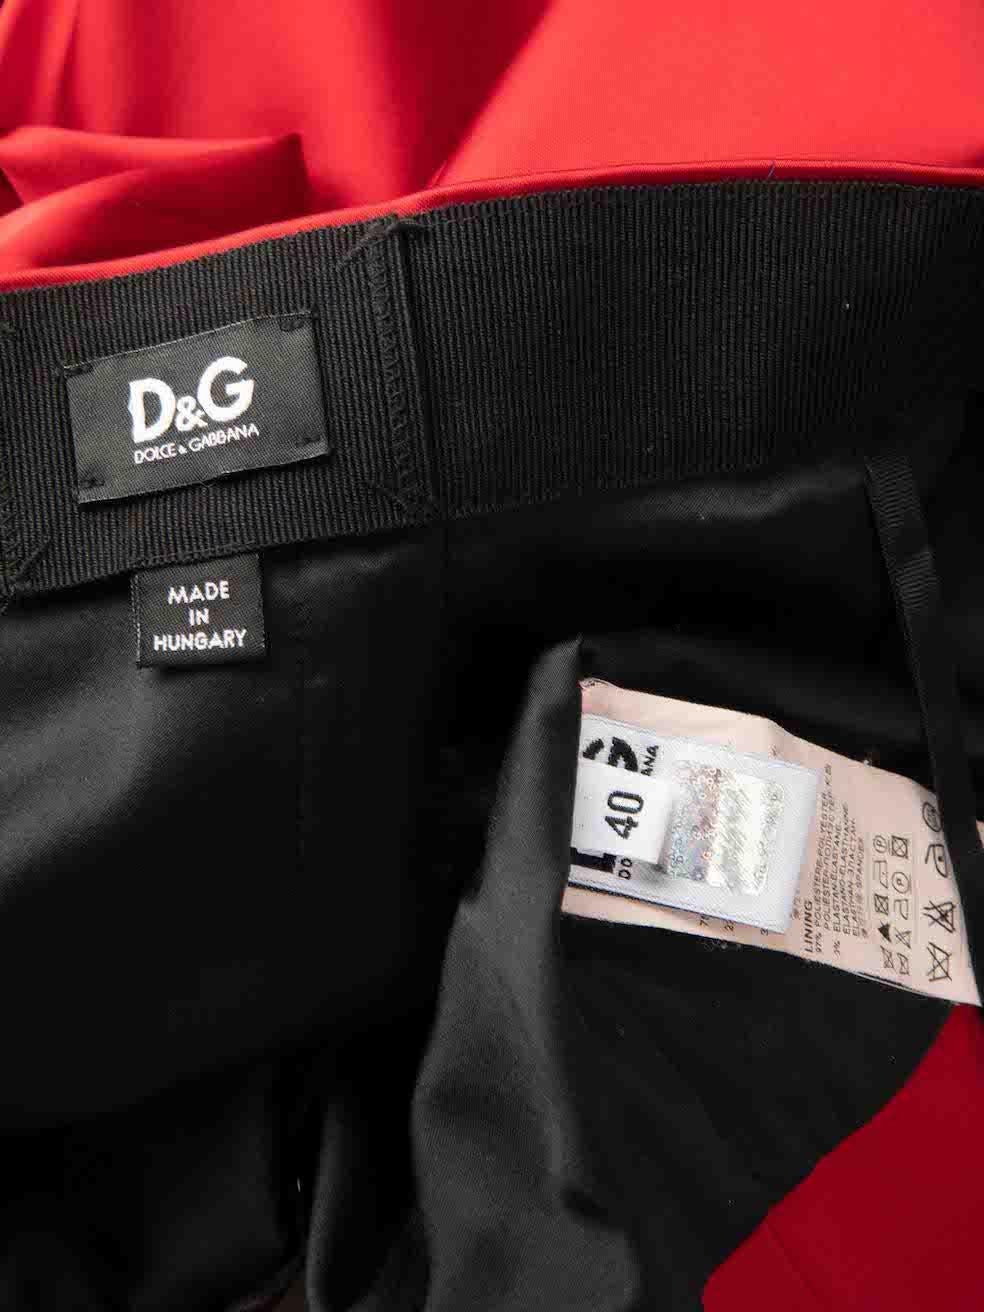 Dolce & Gabbana D&G Red Knee Length Pencil Skirt Size S 2